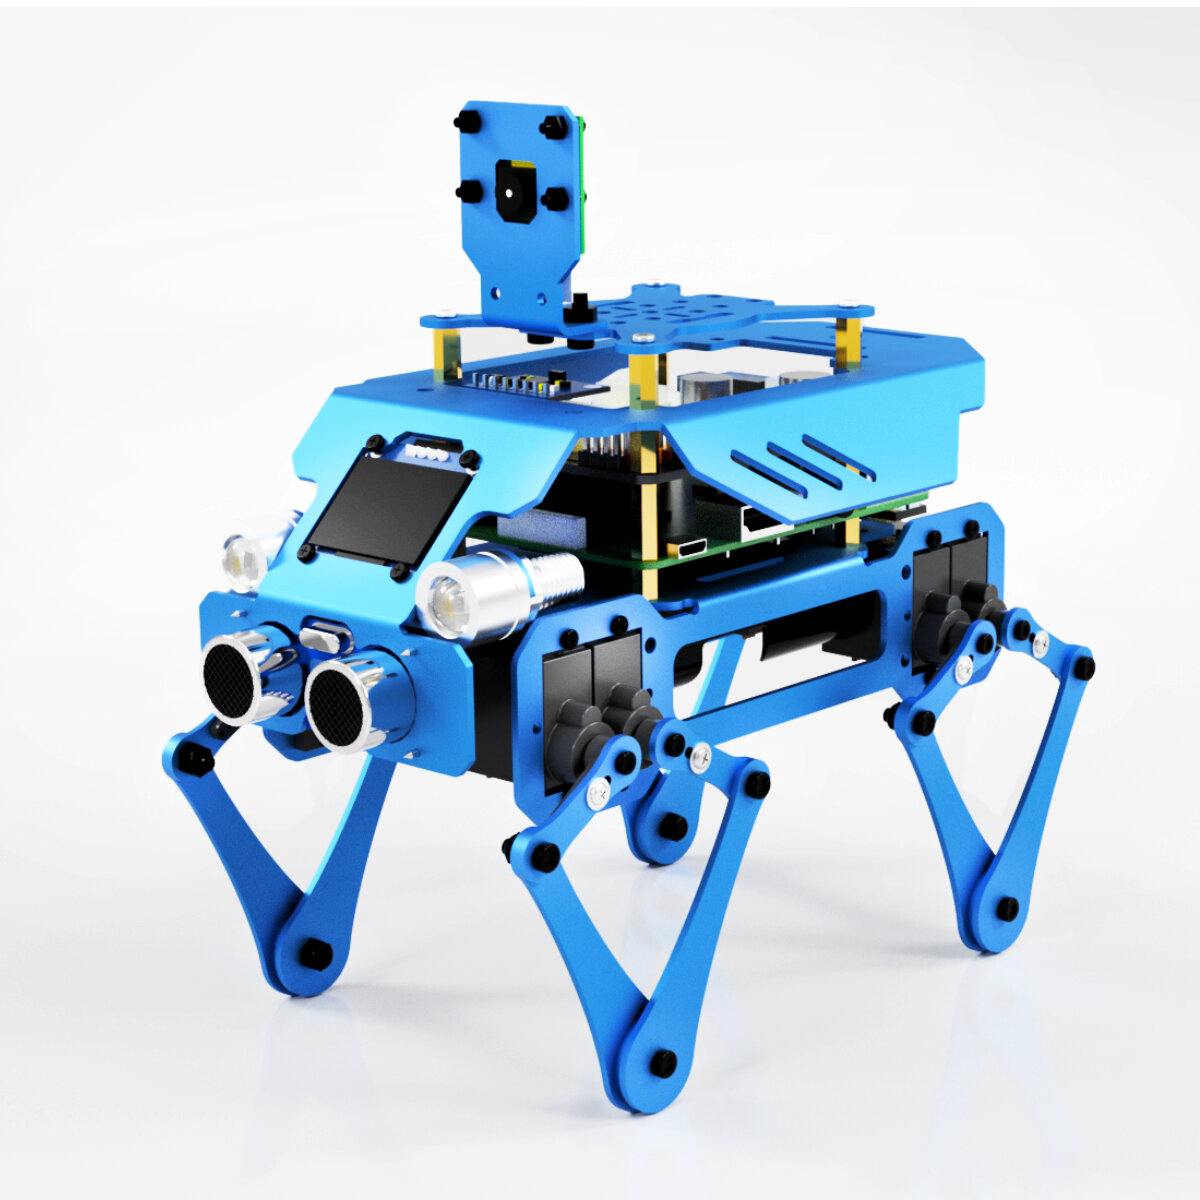 

Adeept Alter Dor Three-in-one Aluminum Alloy Smart Robot Programming Kit STEM Education Support Raspberry Pi